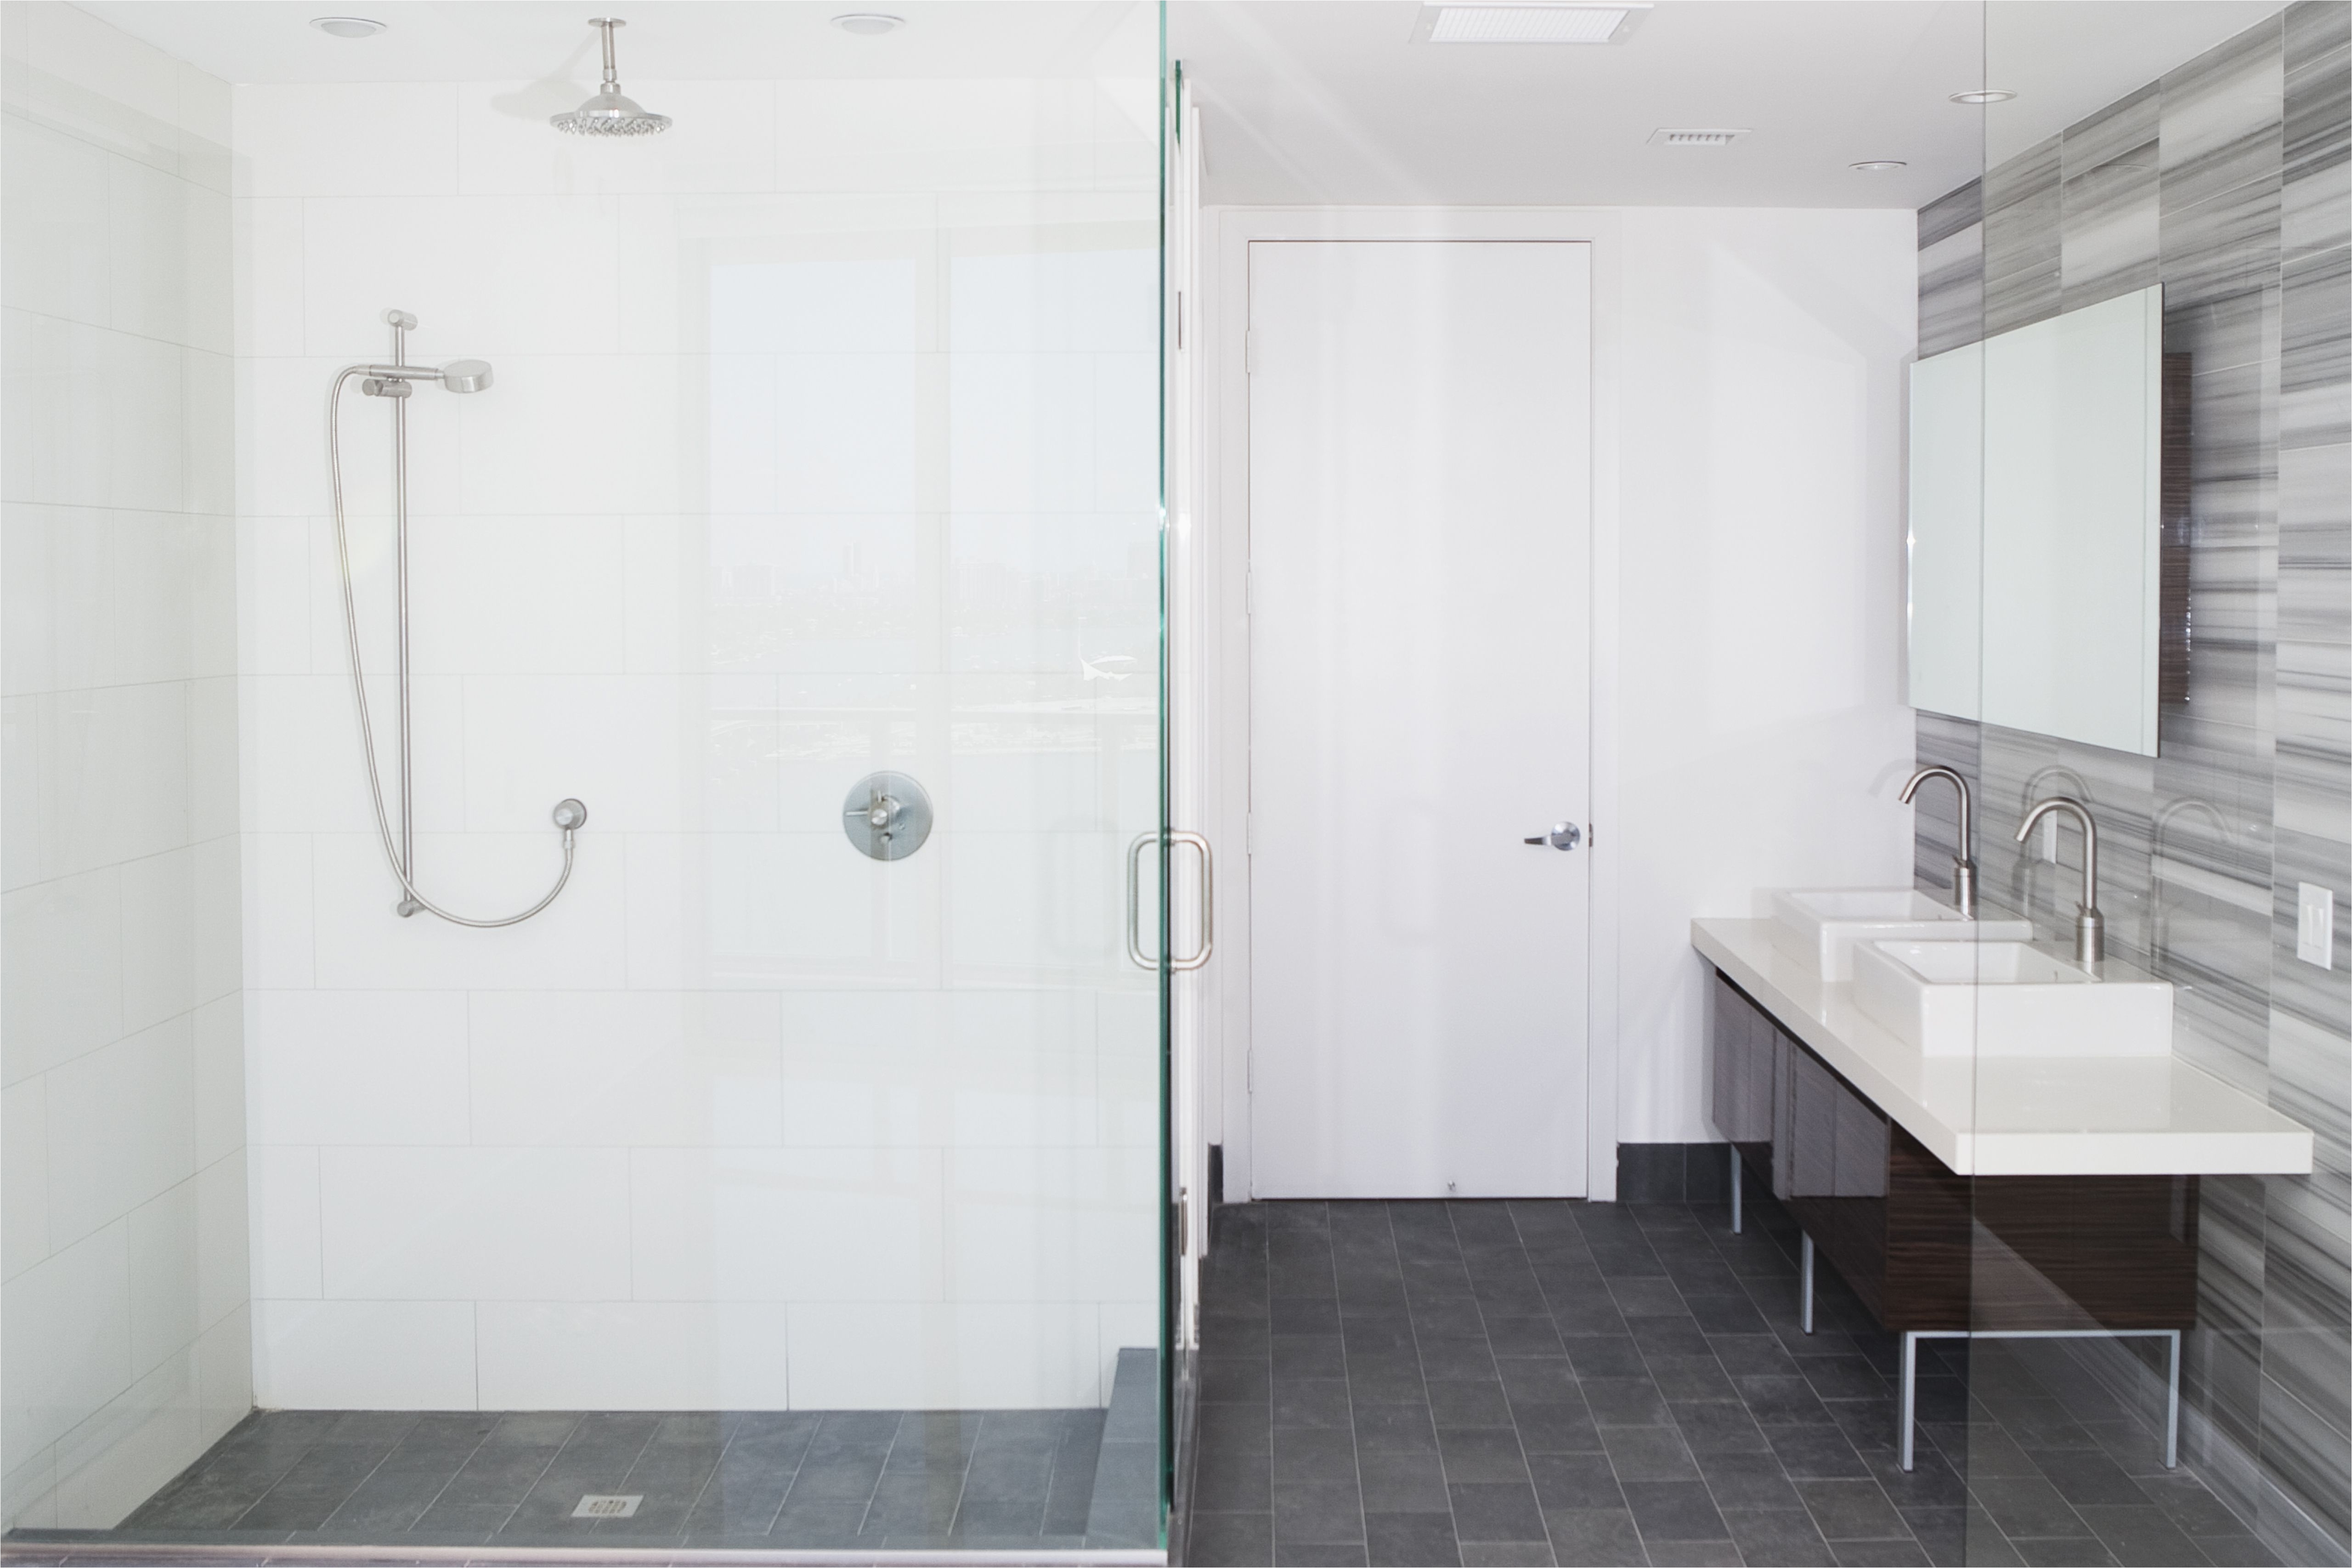 shower sinks and mirror in modern bathroom 533766223 588d18b45f9b5874ee14cb5c